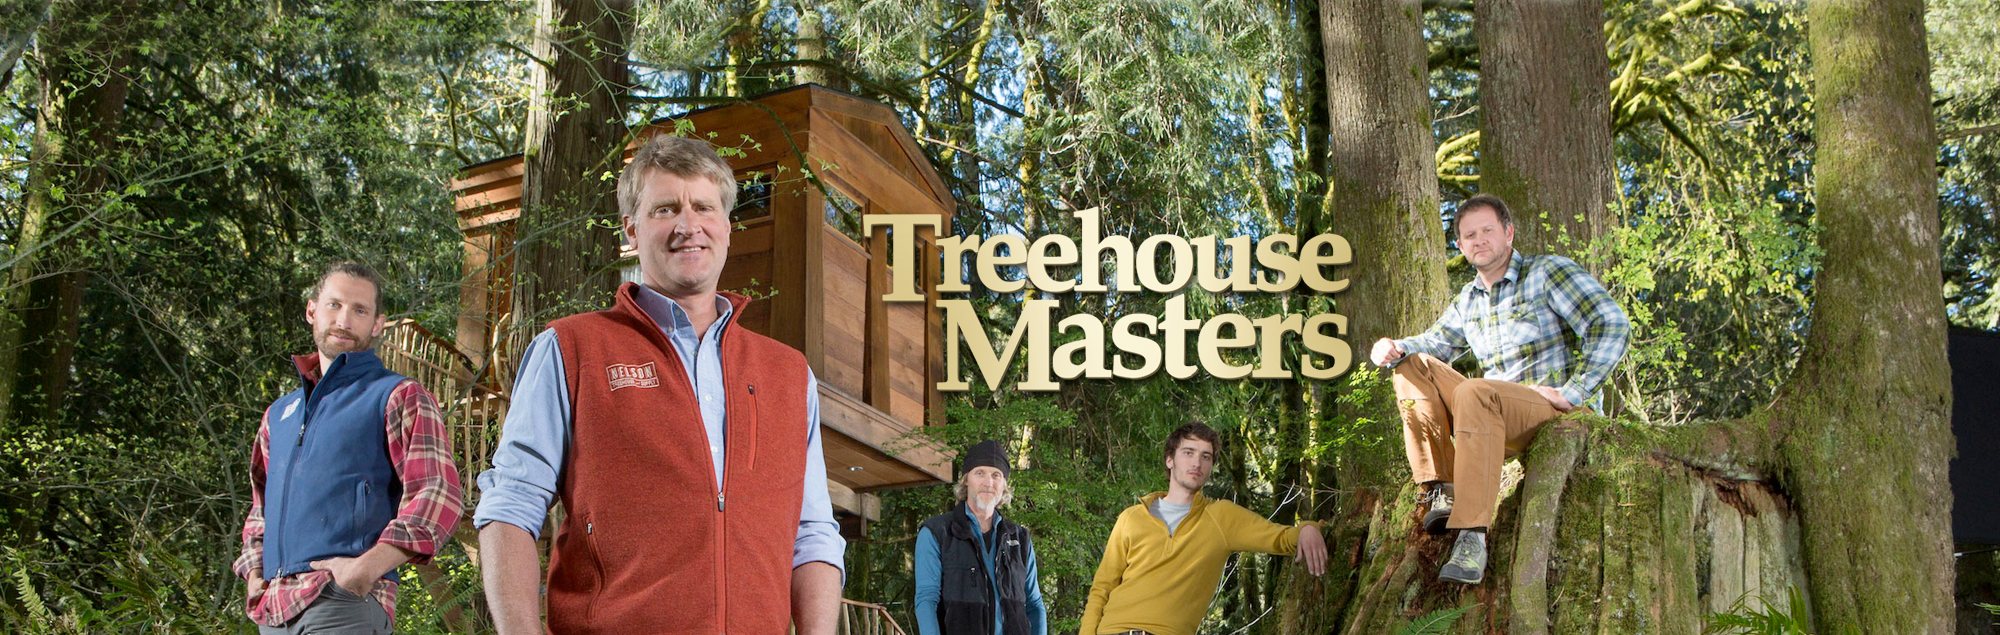 treehousemasters1